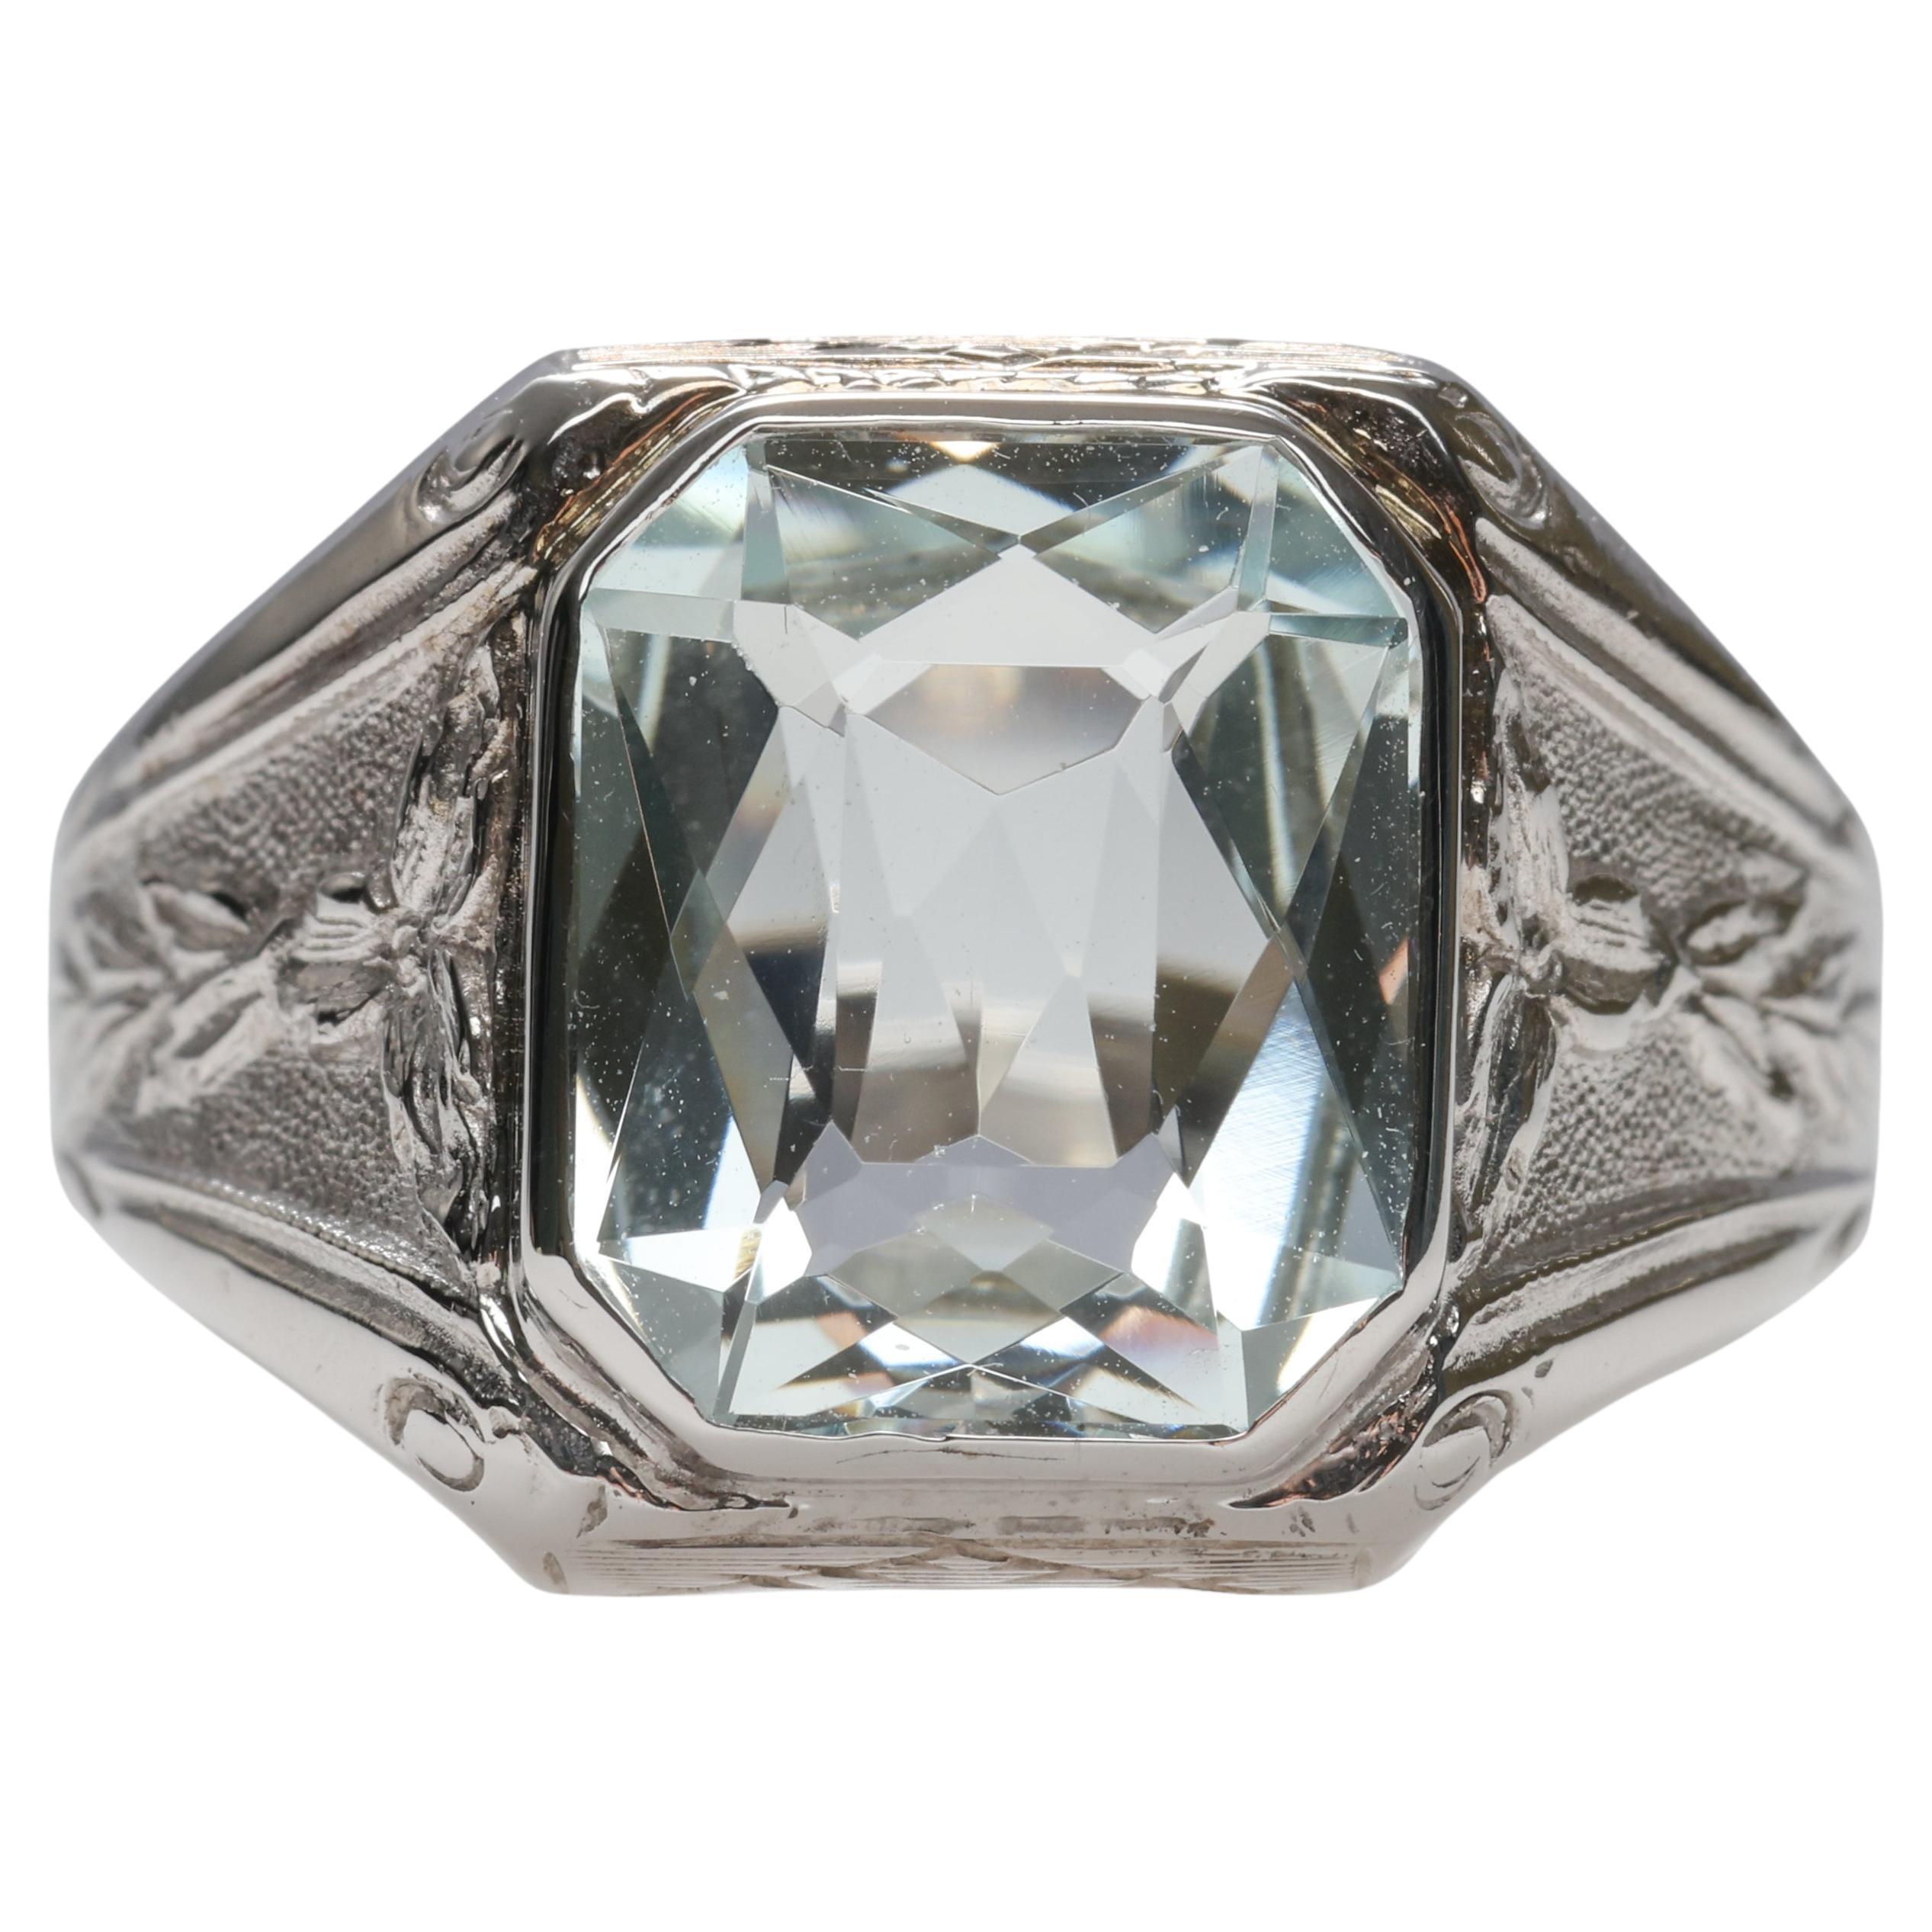 Size 10.75. Art Deco Paste Ring Art Deco Men\u2019s Jewelry White Metal Paste Ring Men\u2019s Paste Ring